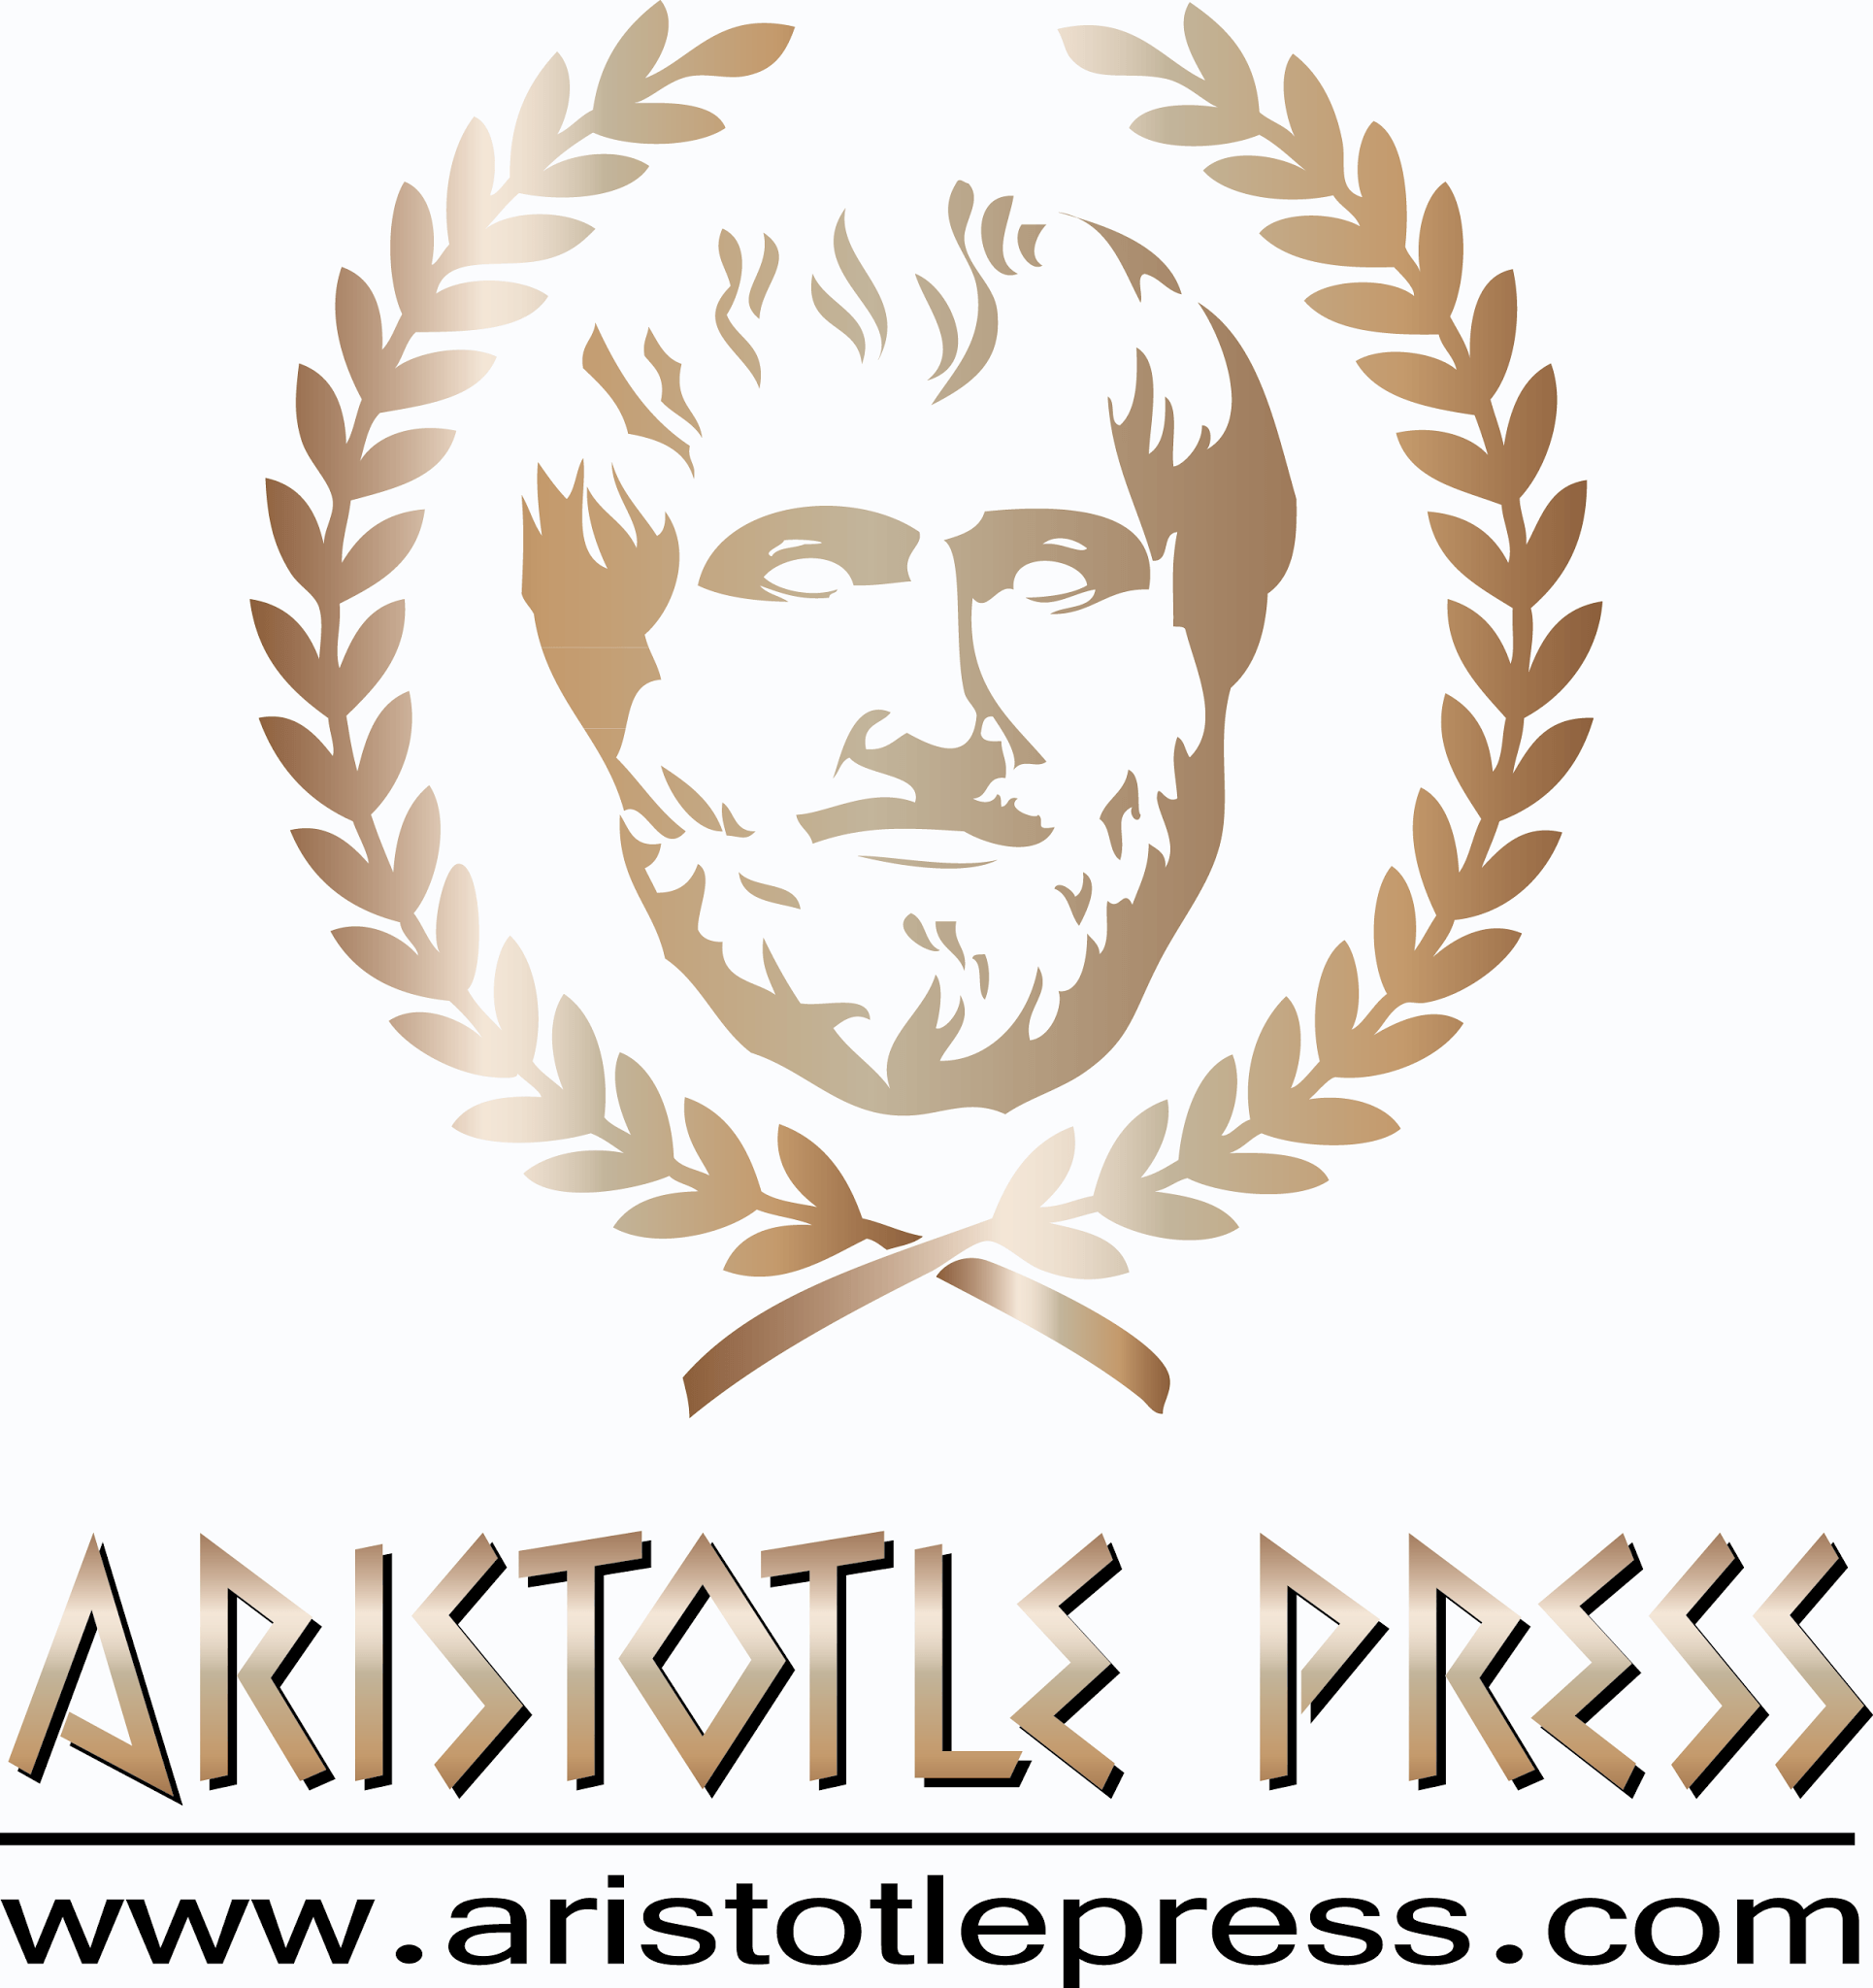 Aristotle Logo - Aristotle Press - Google+